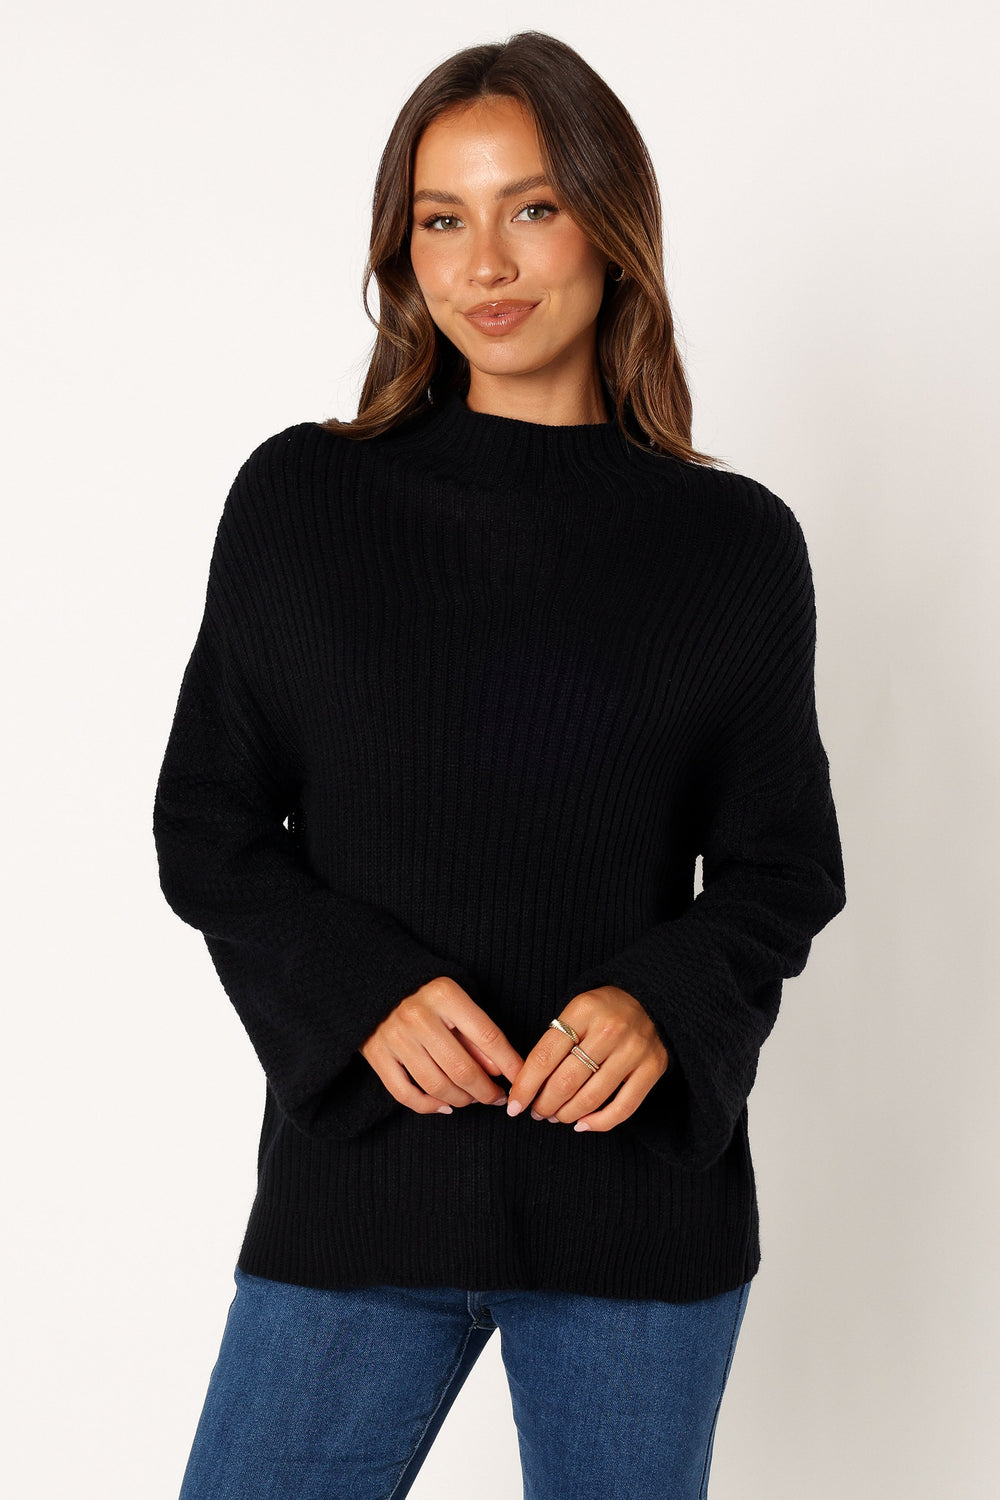 Petal and Pup USA KNITWEAR Lorelei Textured Sleeve Knit Sweater - Black